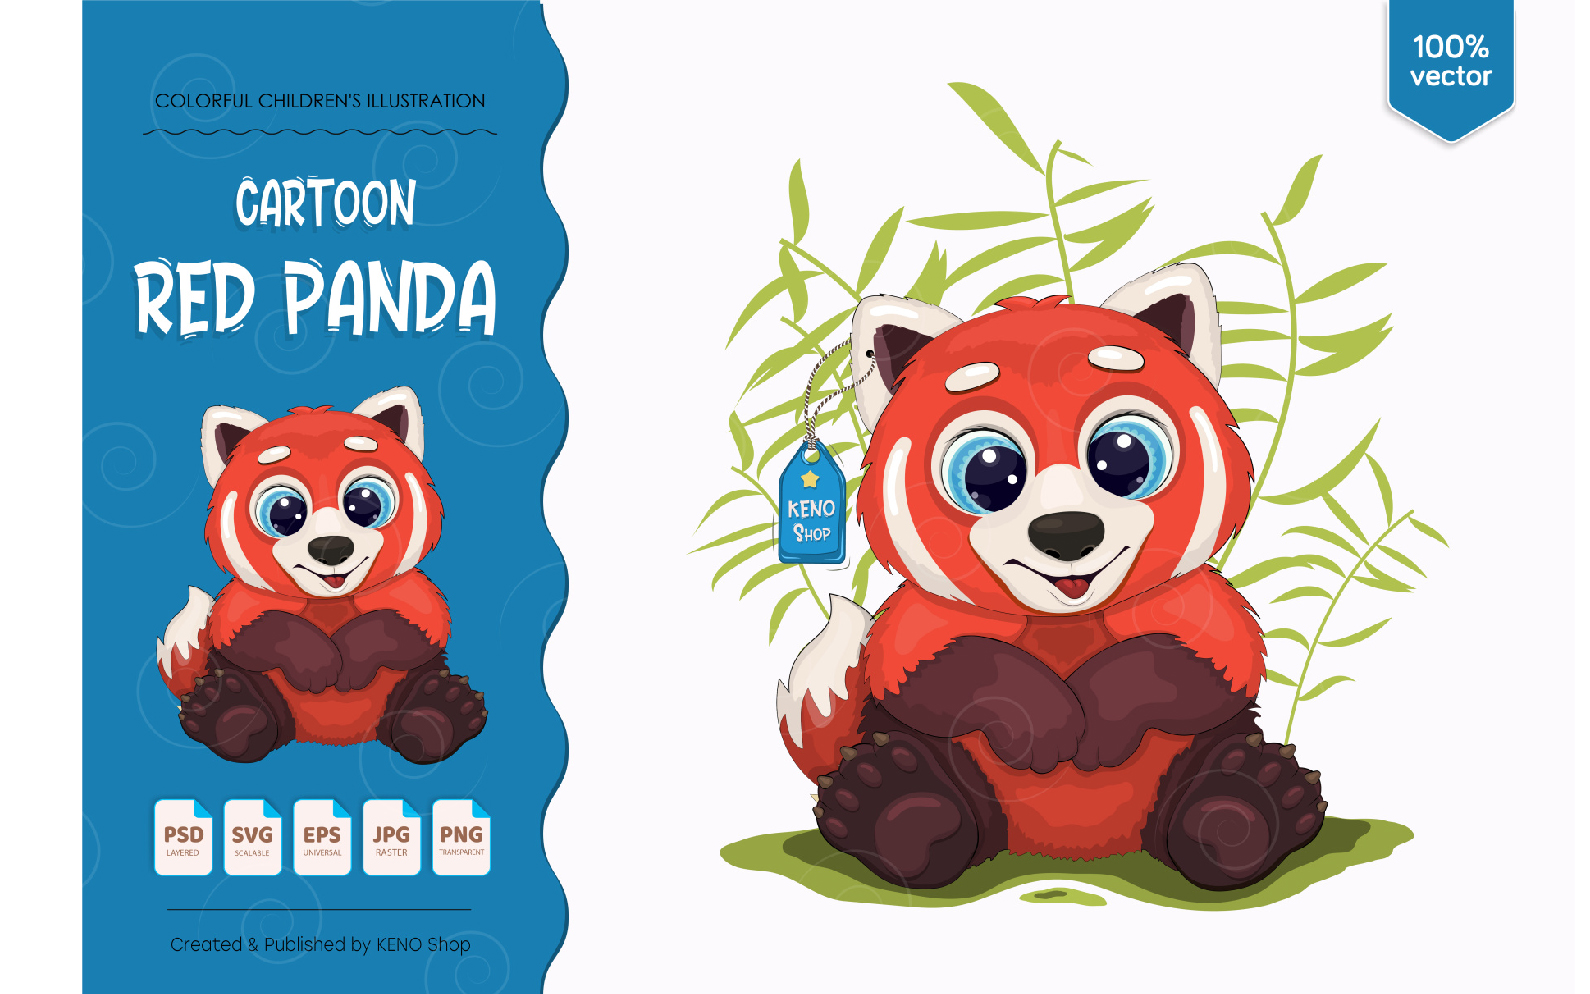 Big Cartoon Red Panda - Vector Image